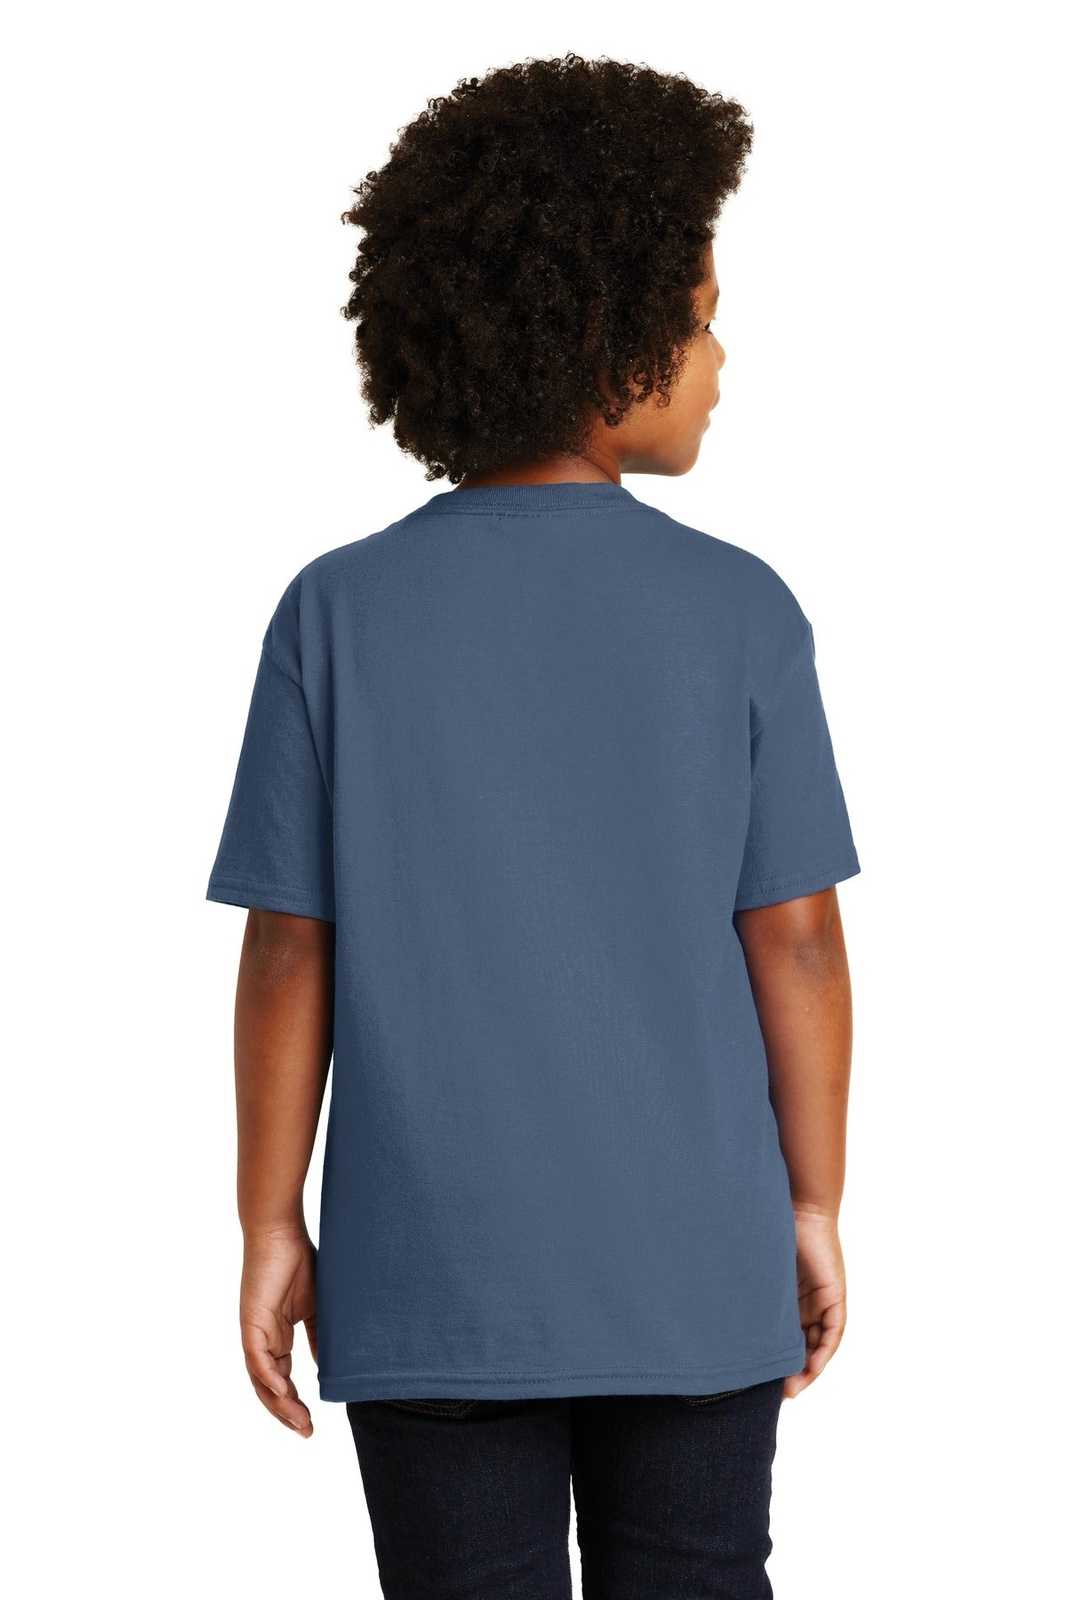 Gildan 2000B Youth Ultra Cotton 100% Cotton T-Shirt - Indigo Blue - HIT a Double